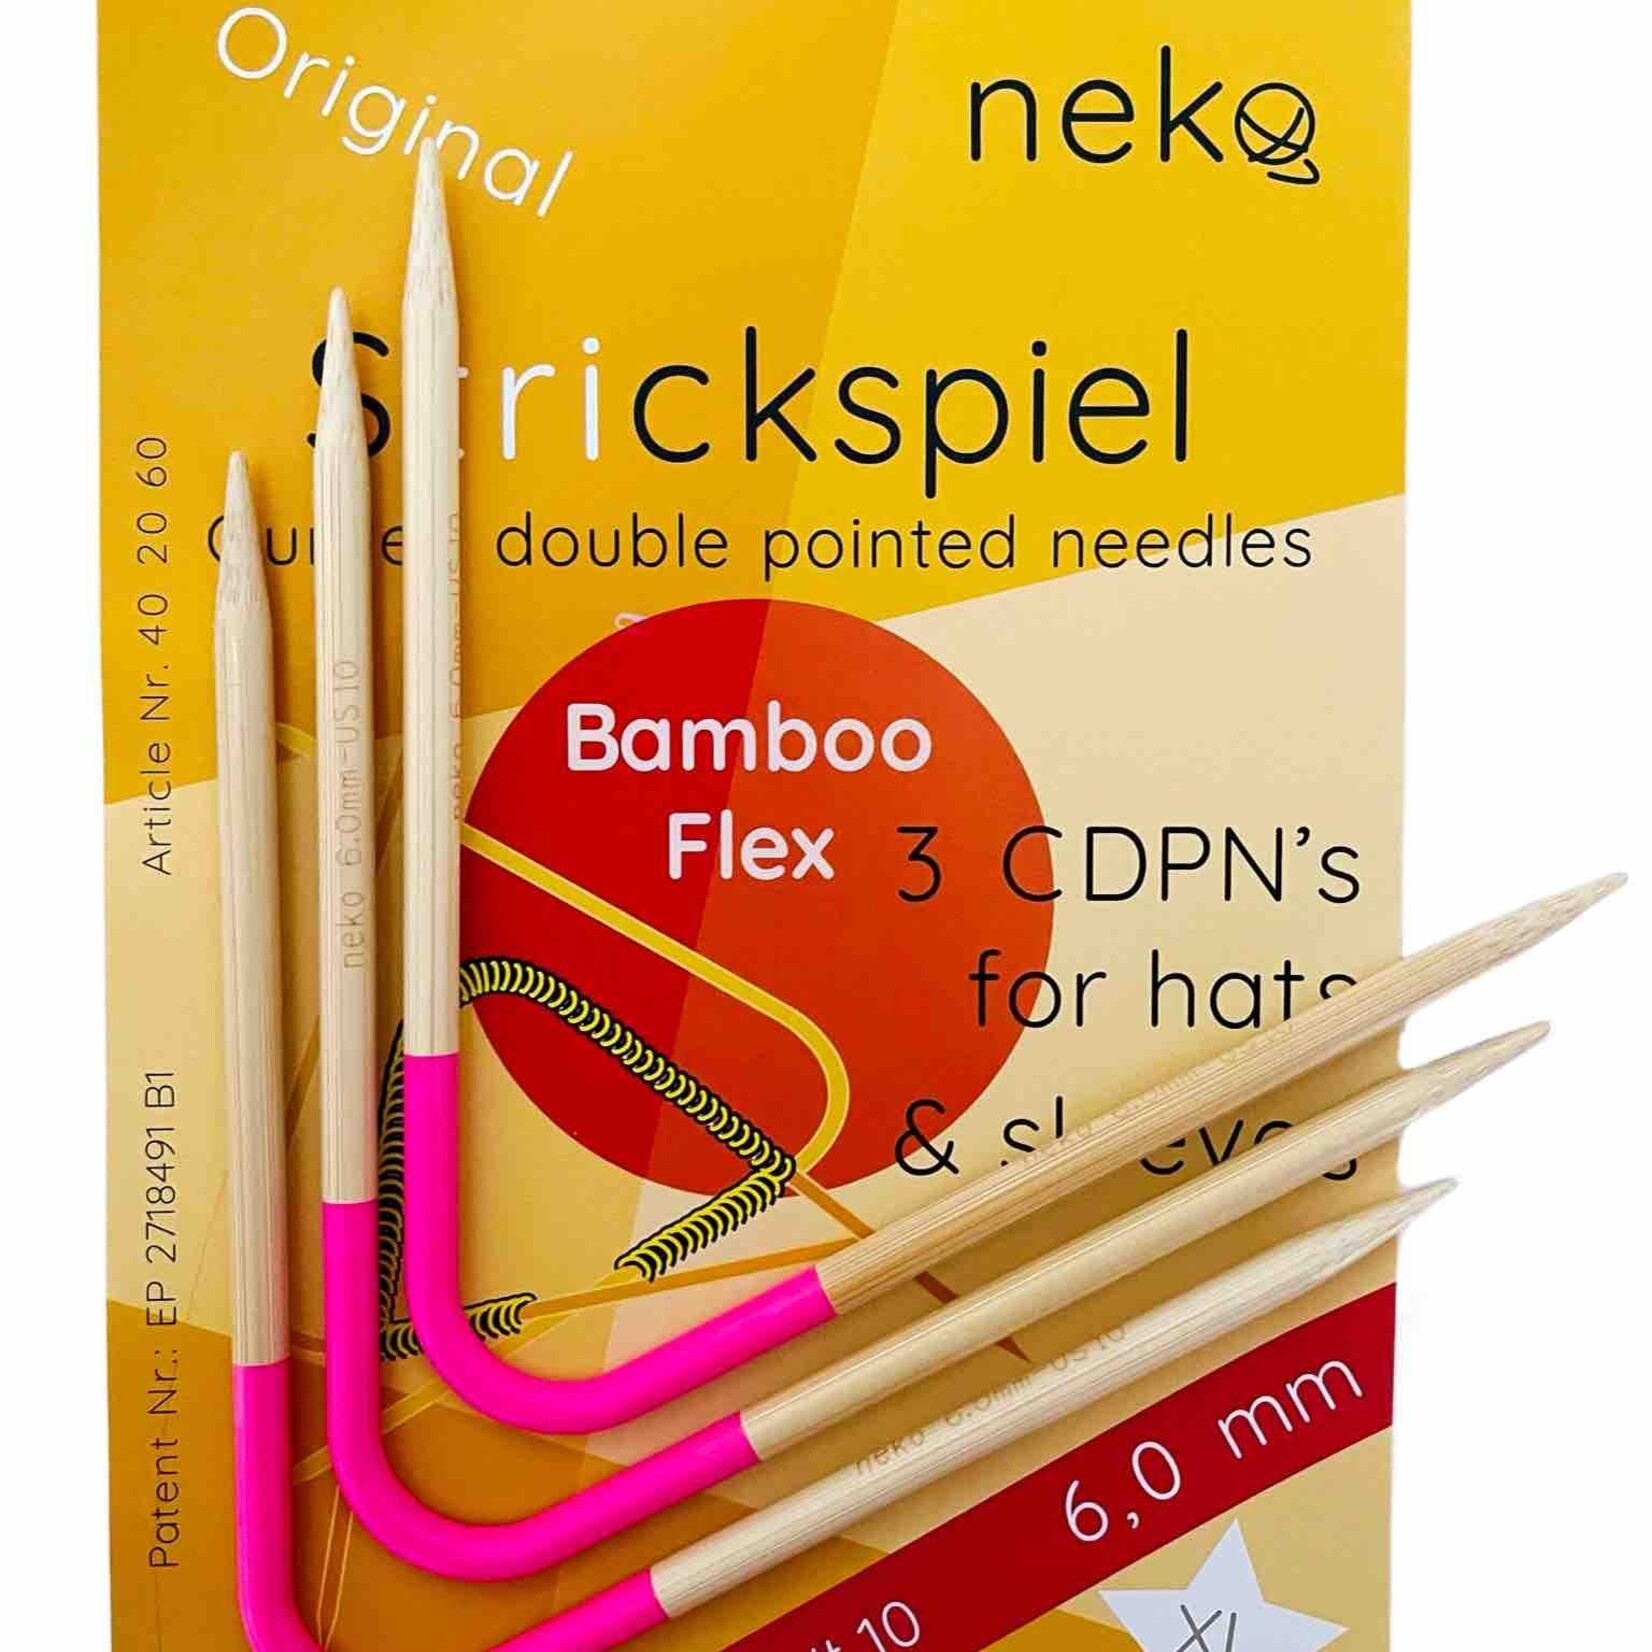 Neko Knit Neko Knitting Needles